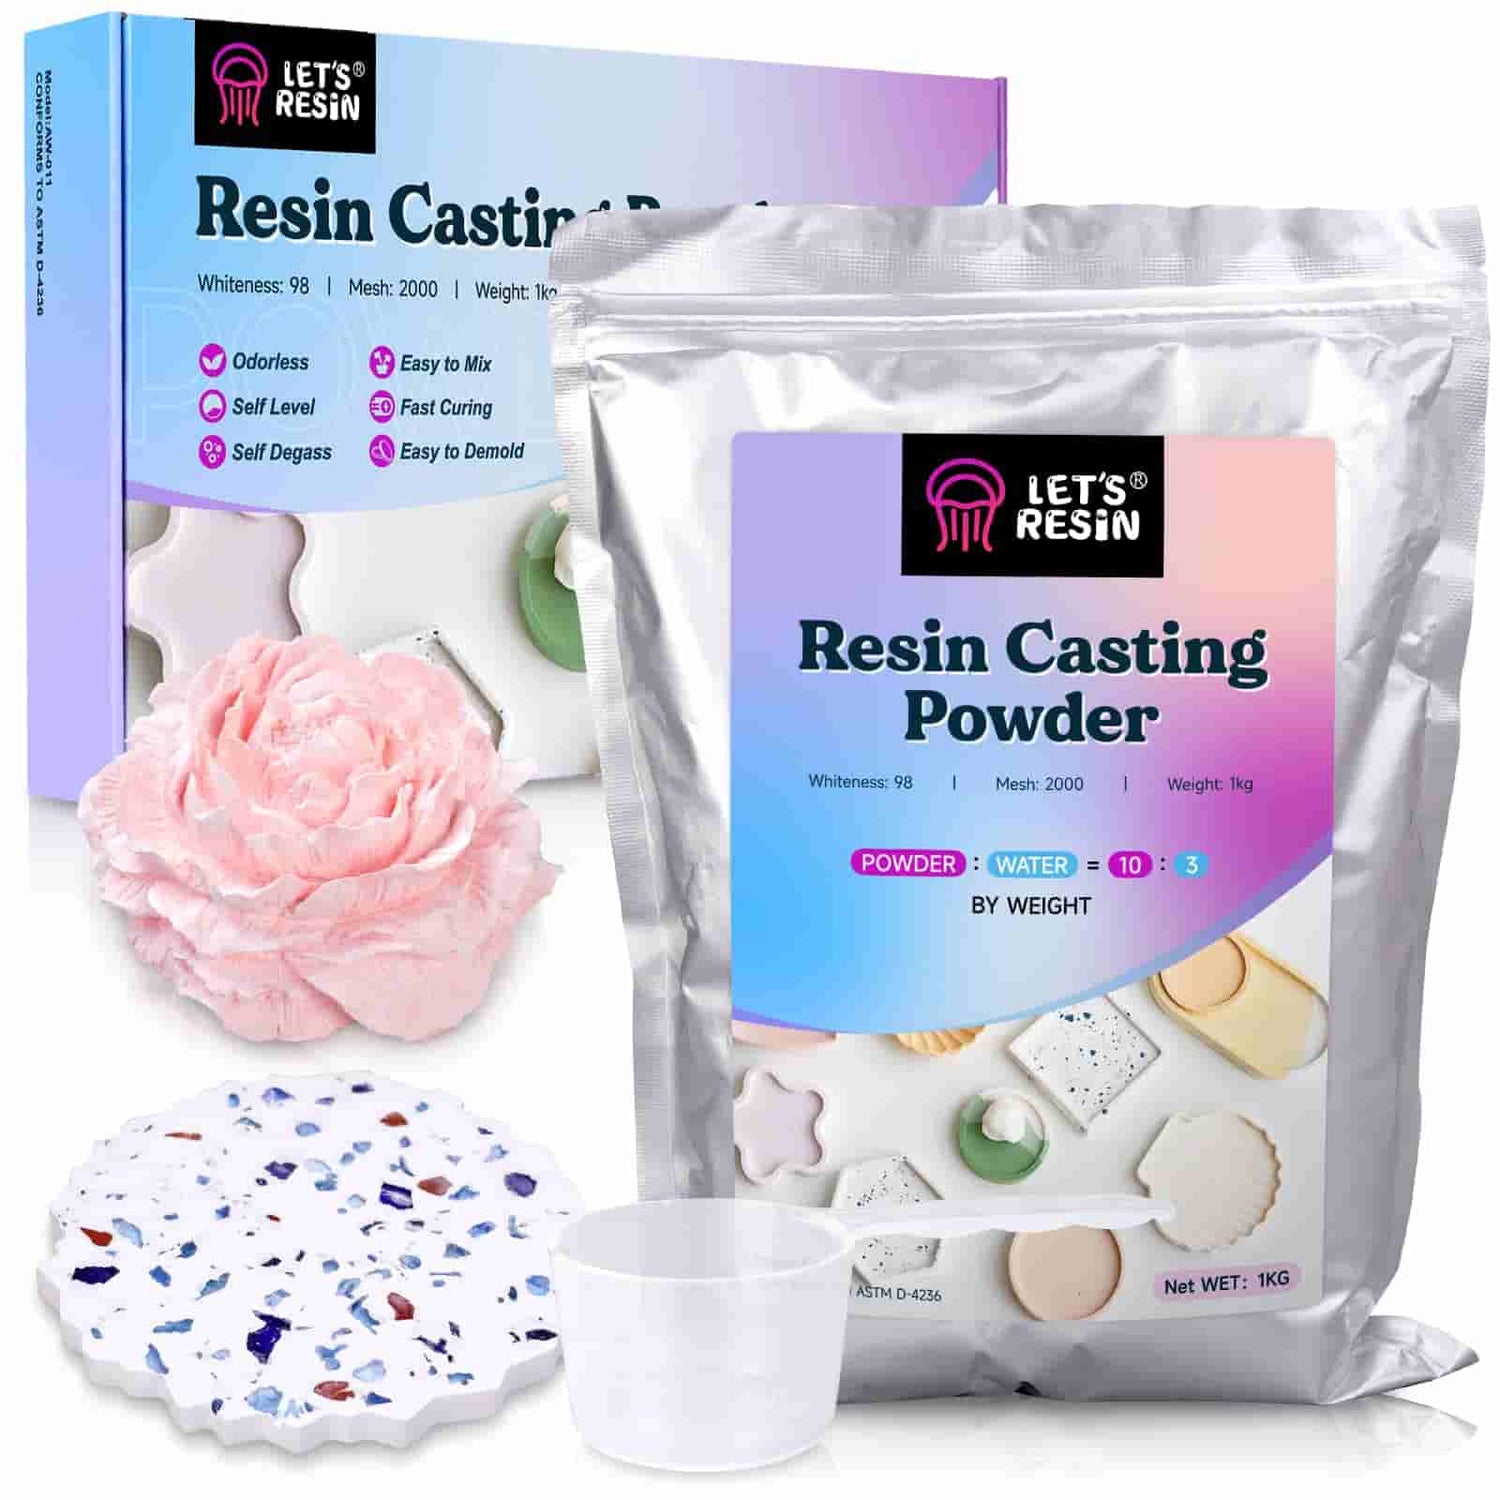 Resin Casting Powder - 1kg